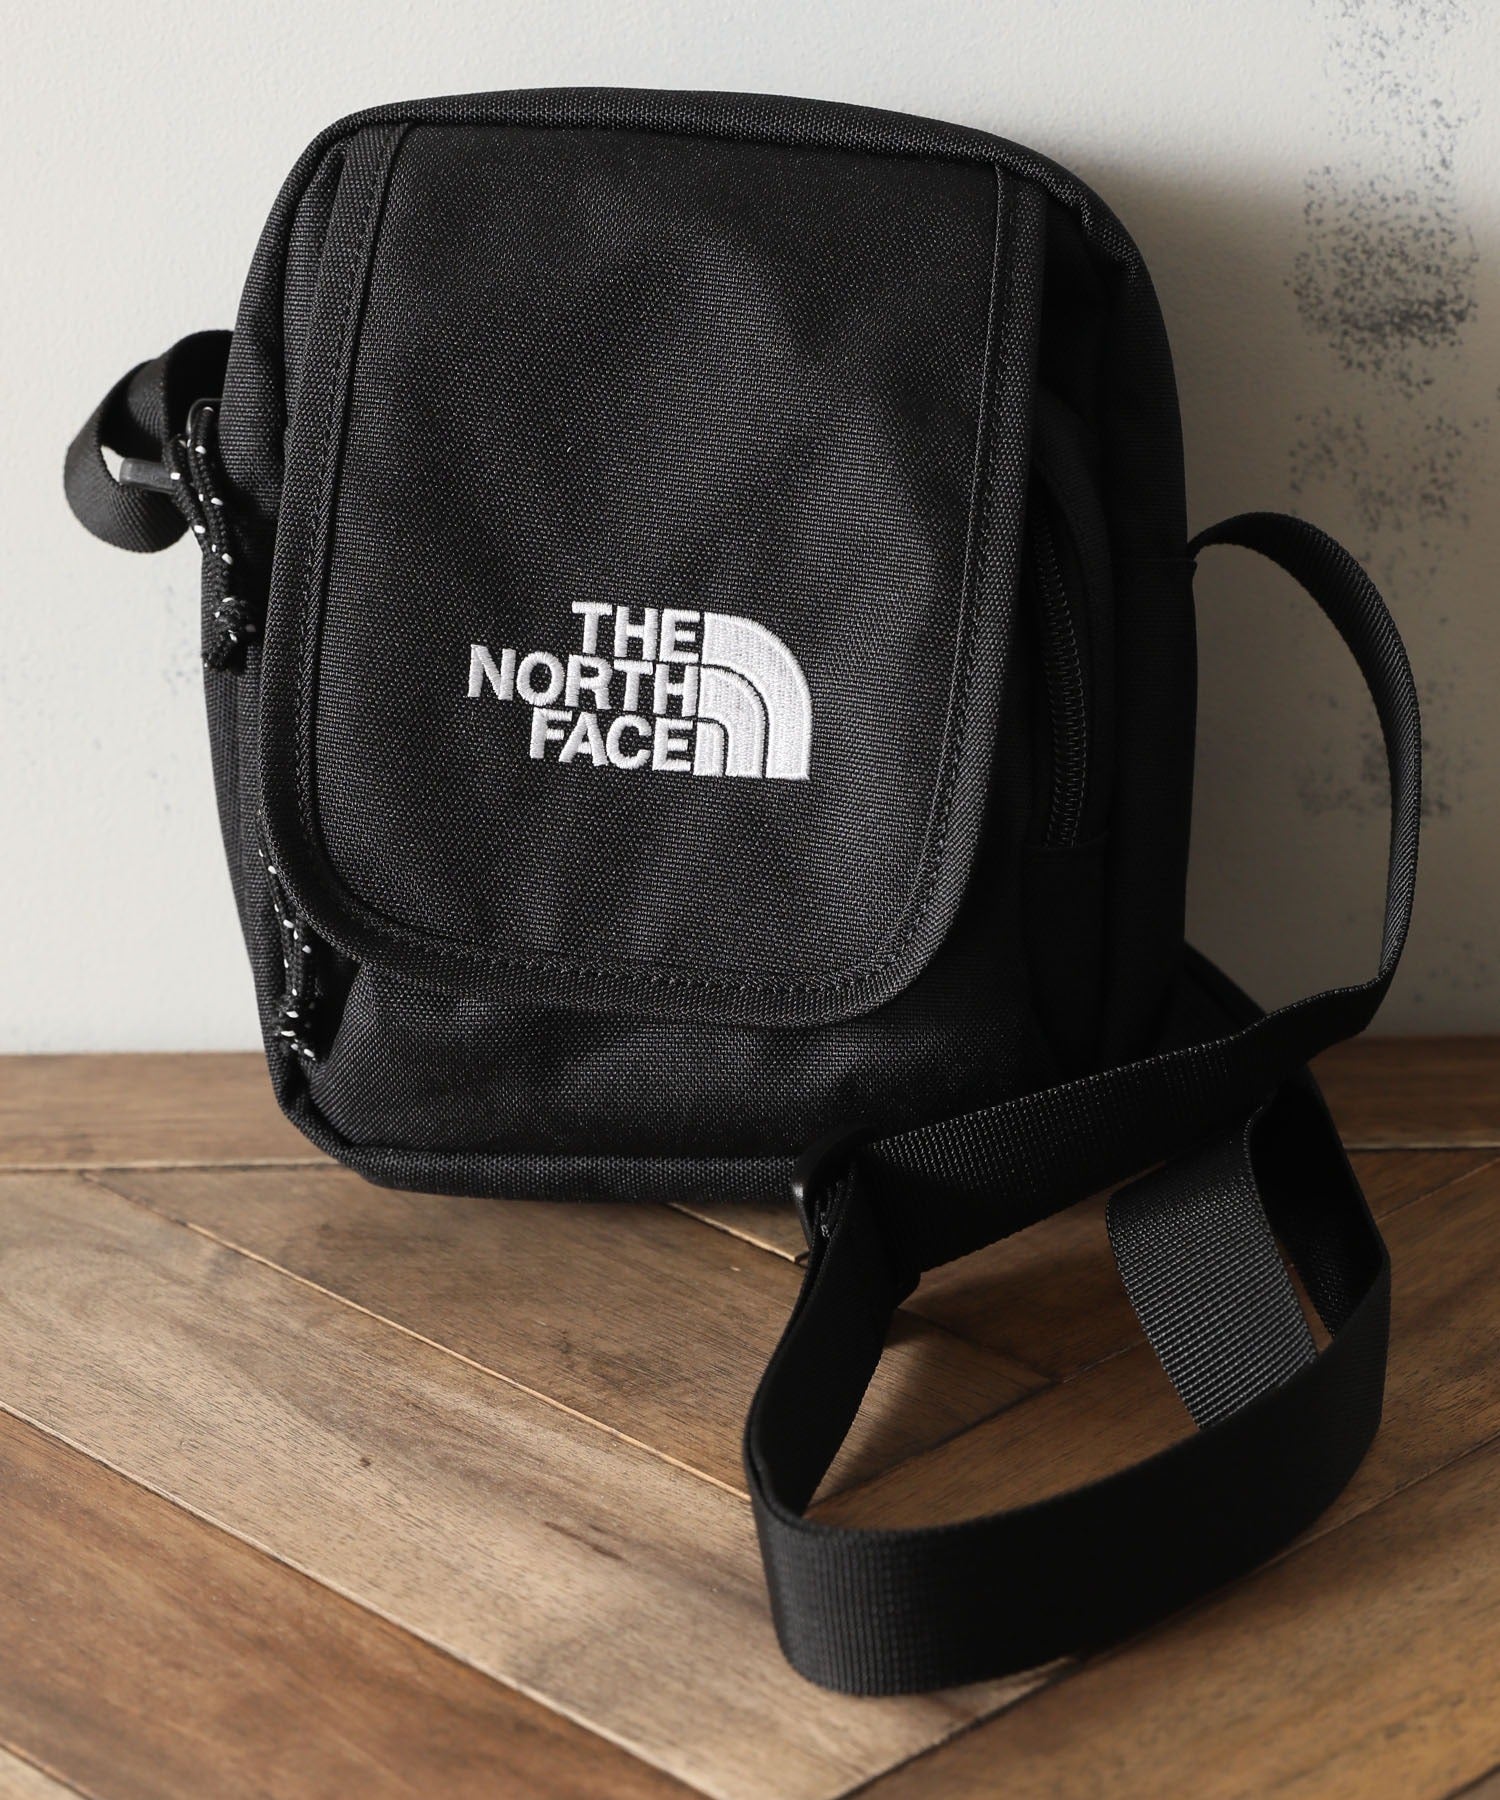 THE NORTH FACE/ザノースフェイス】Flap Cross Bag Mini/フラップ